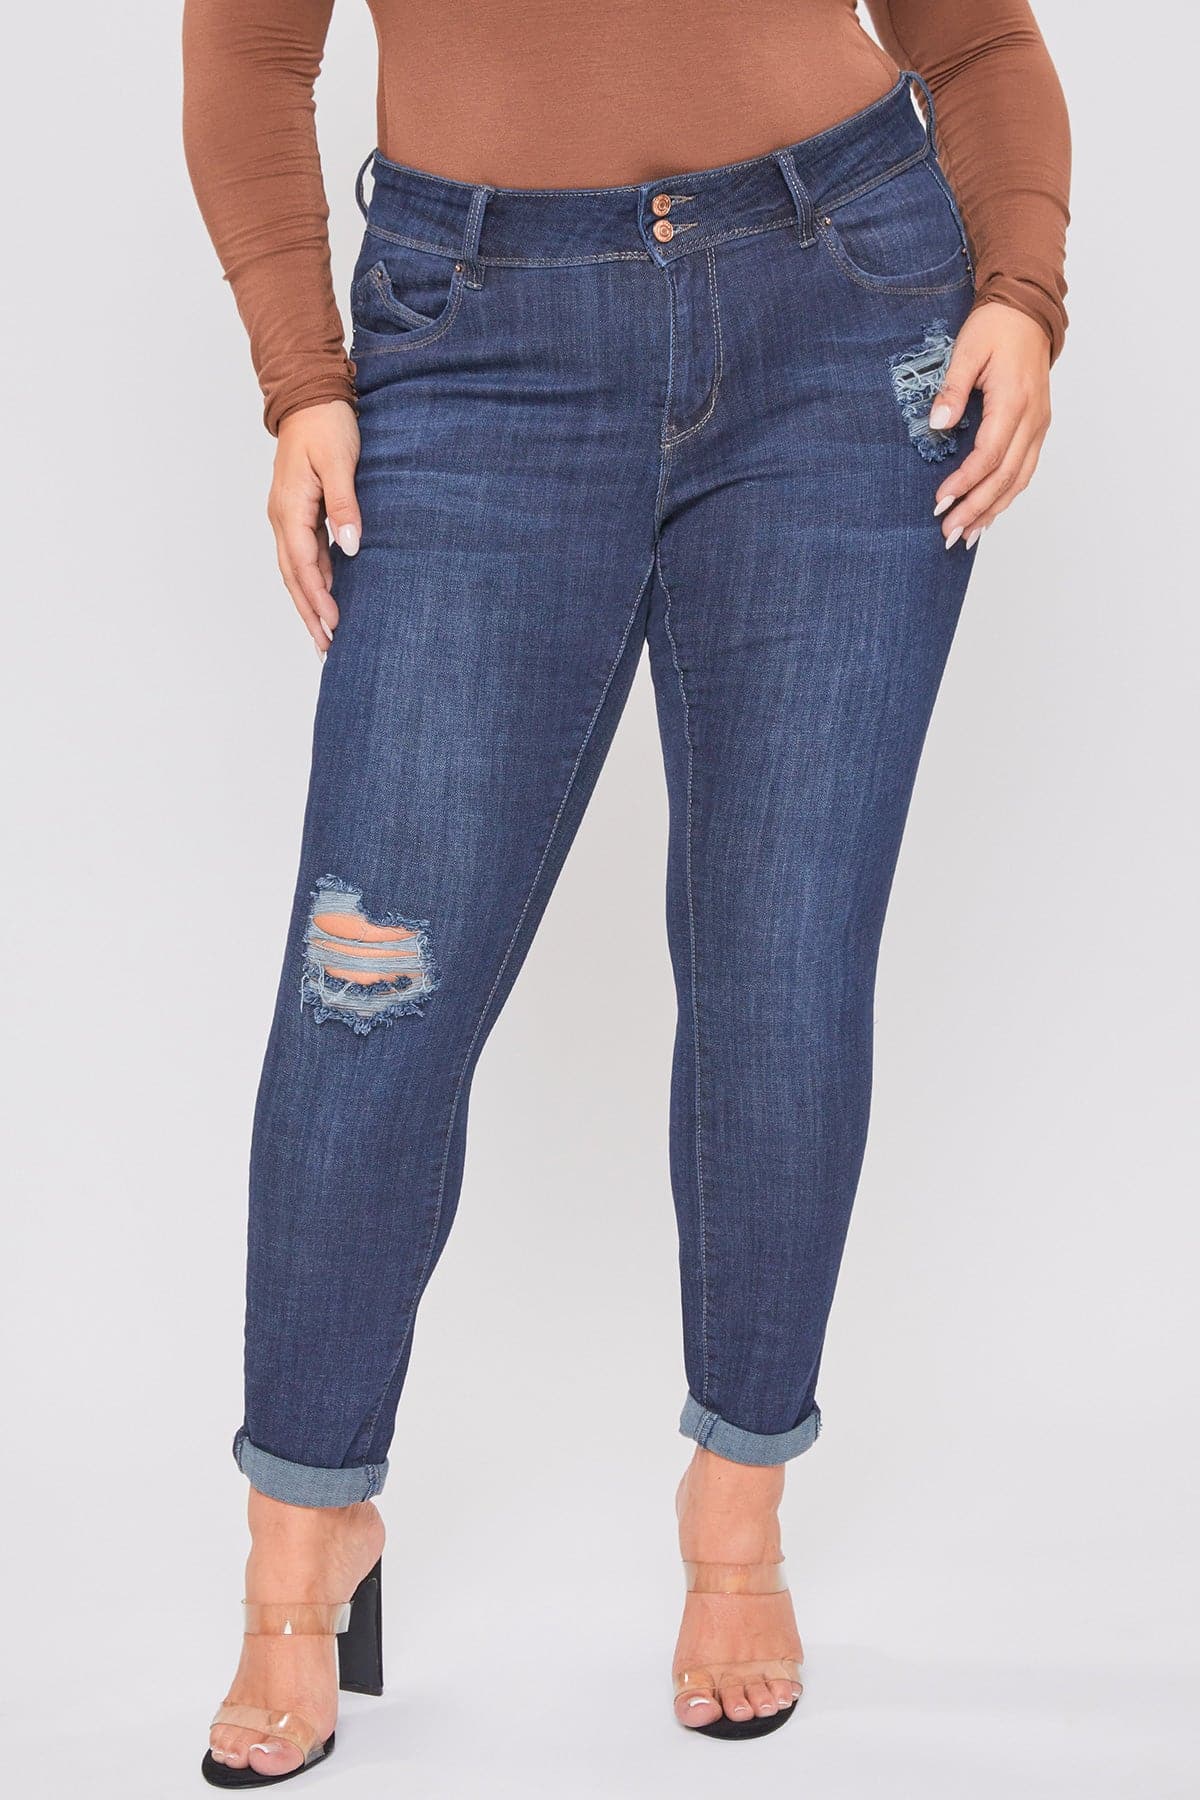 Plus Size Women's WannaBettaButt Premium Roll Up Cuff Ankle Jeans